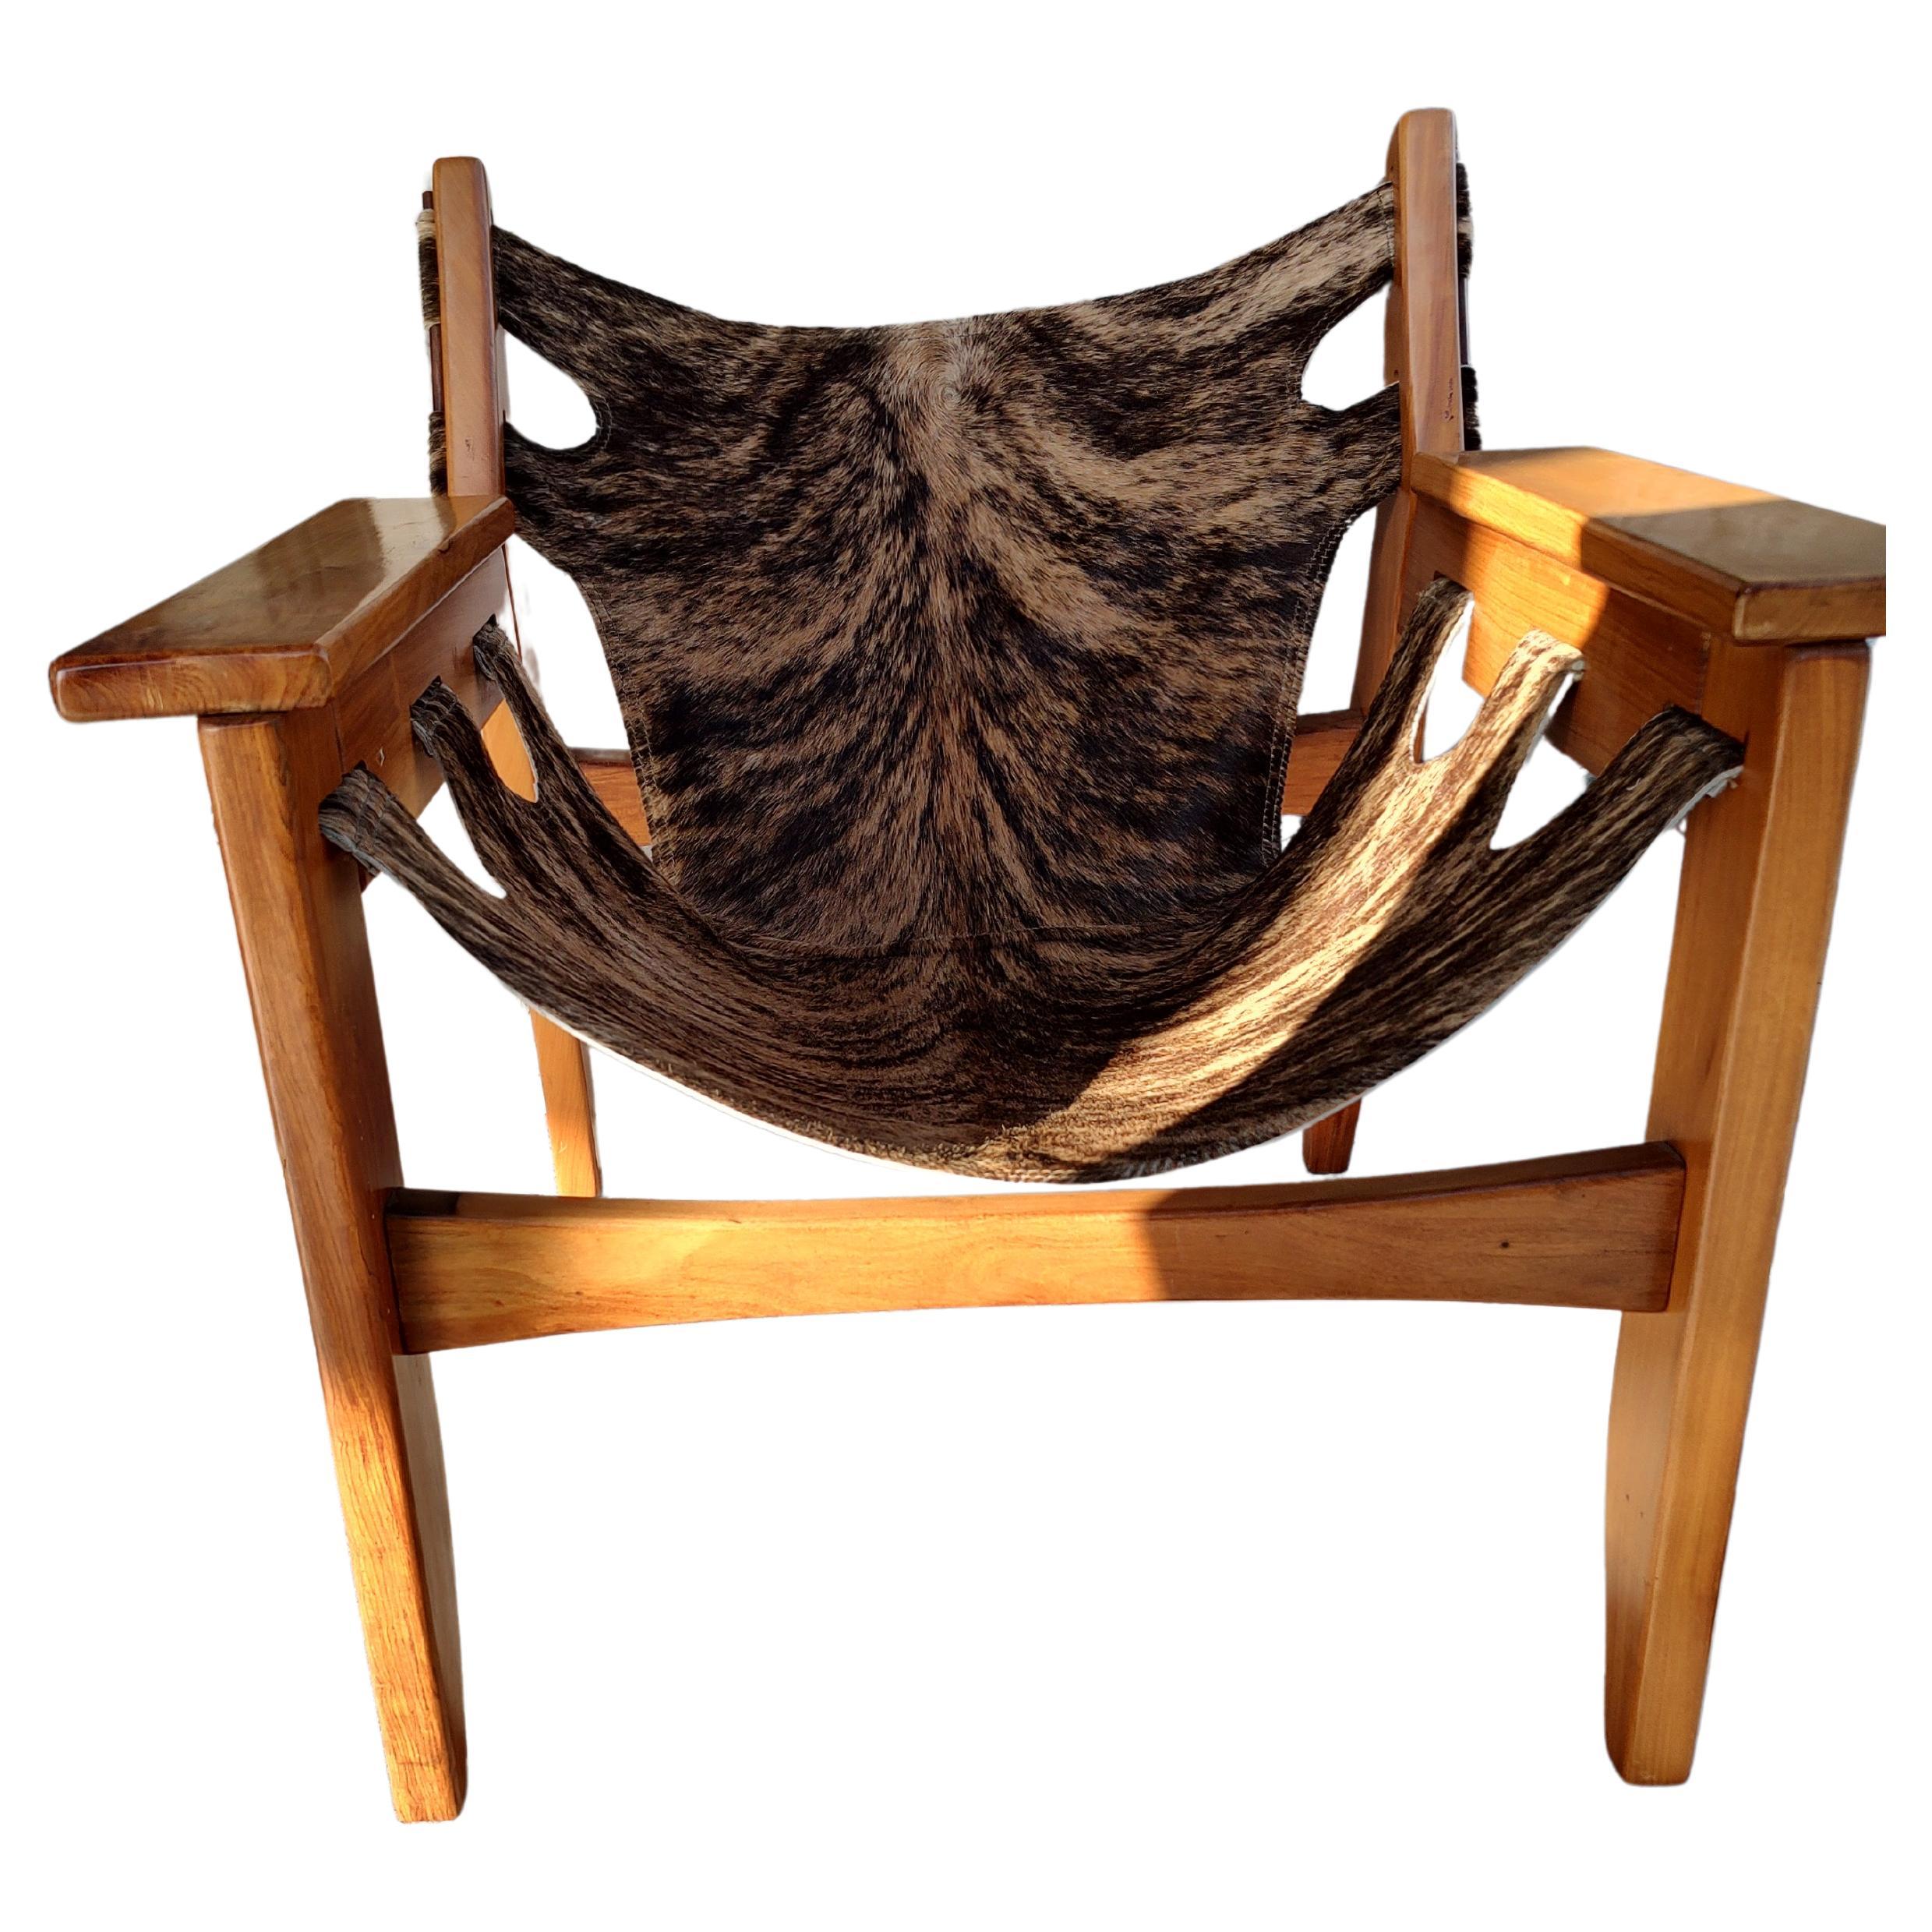 Fin du 20e siècle Chaise longue « Kilin » de Sergio Rodrigues x, style mi-siècle moderne